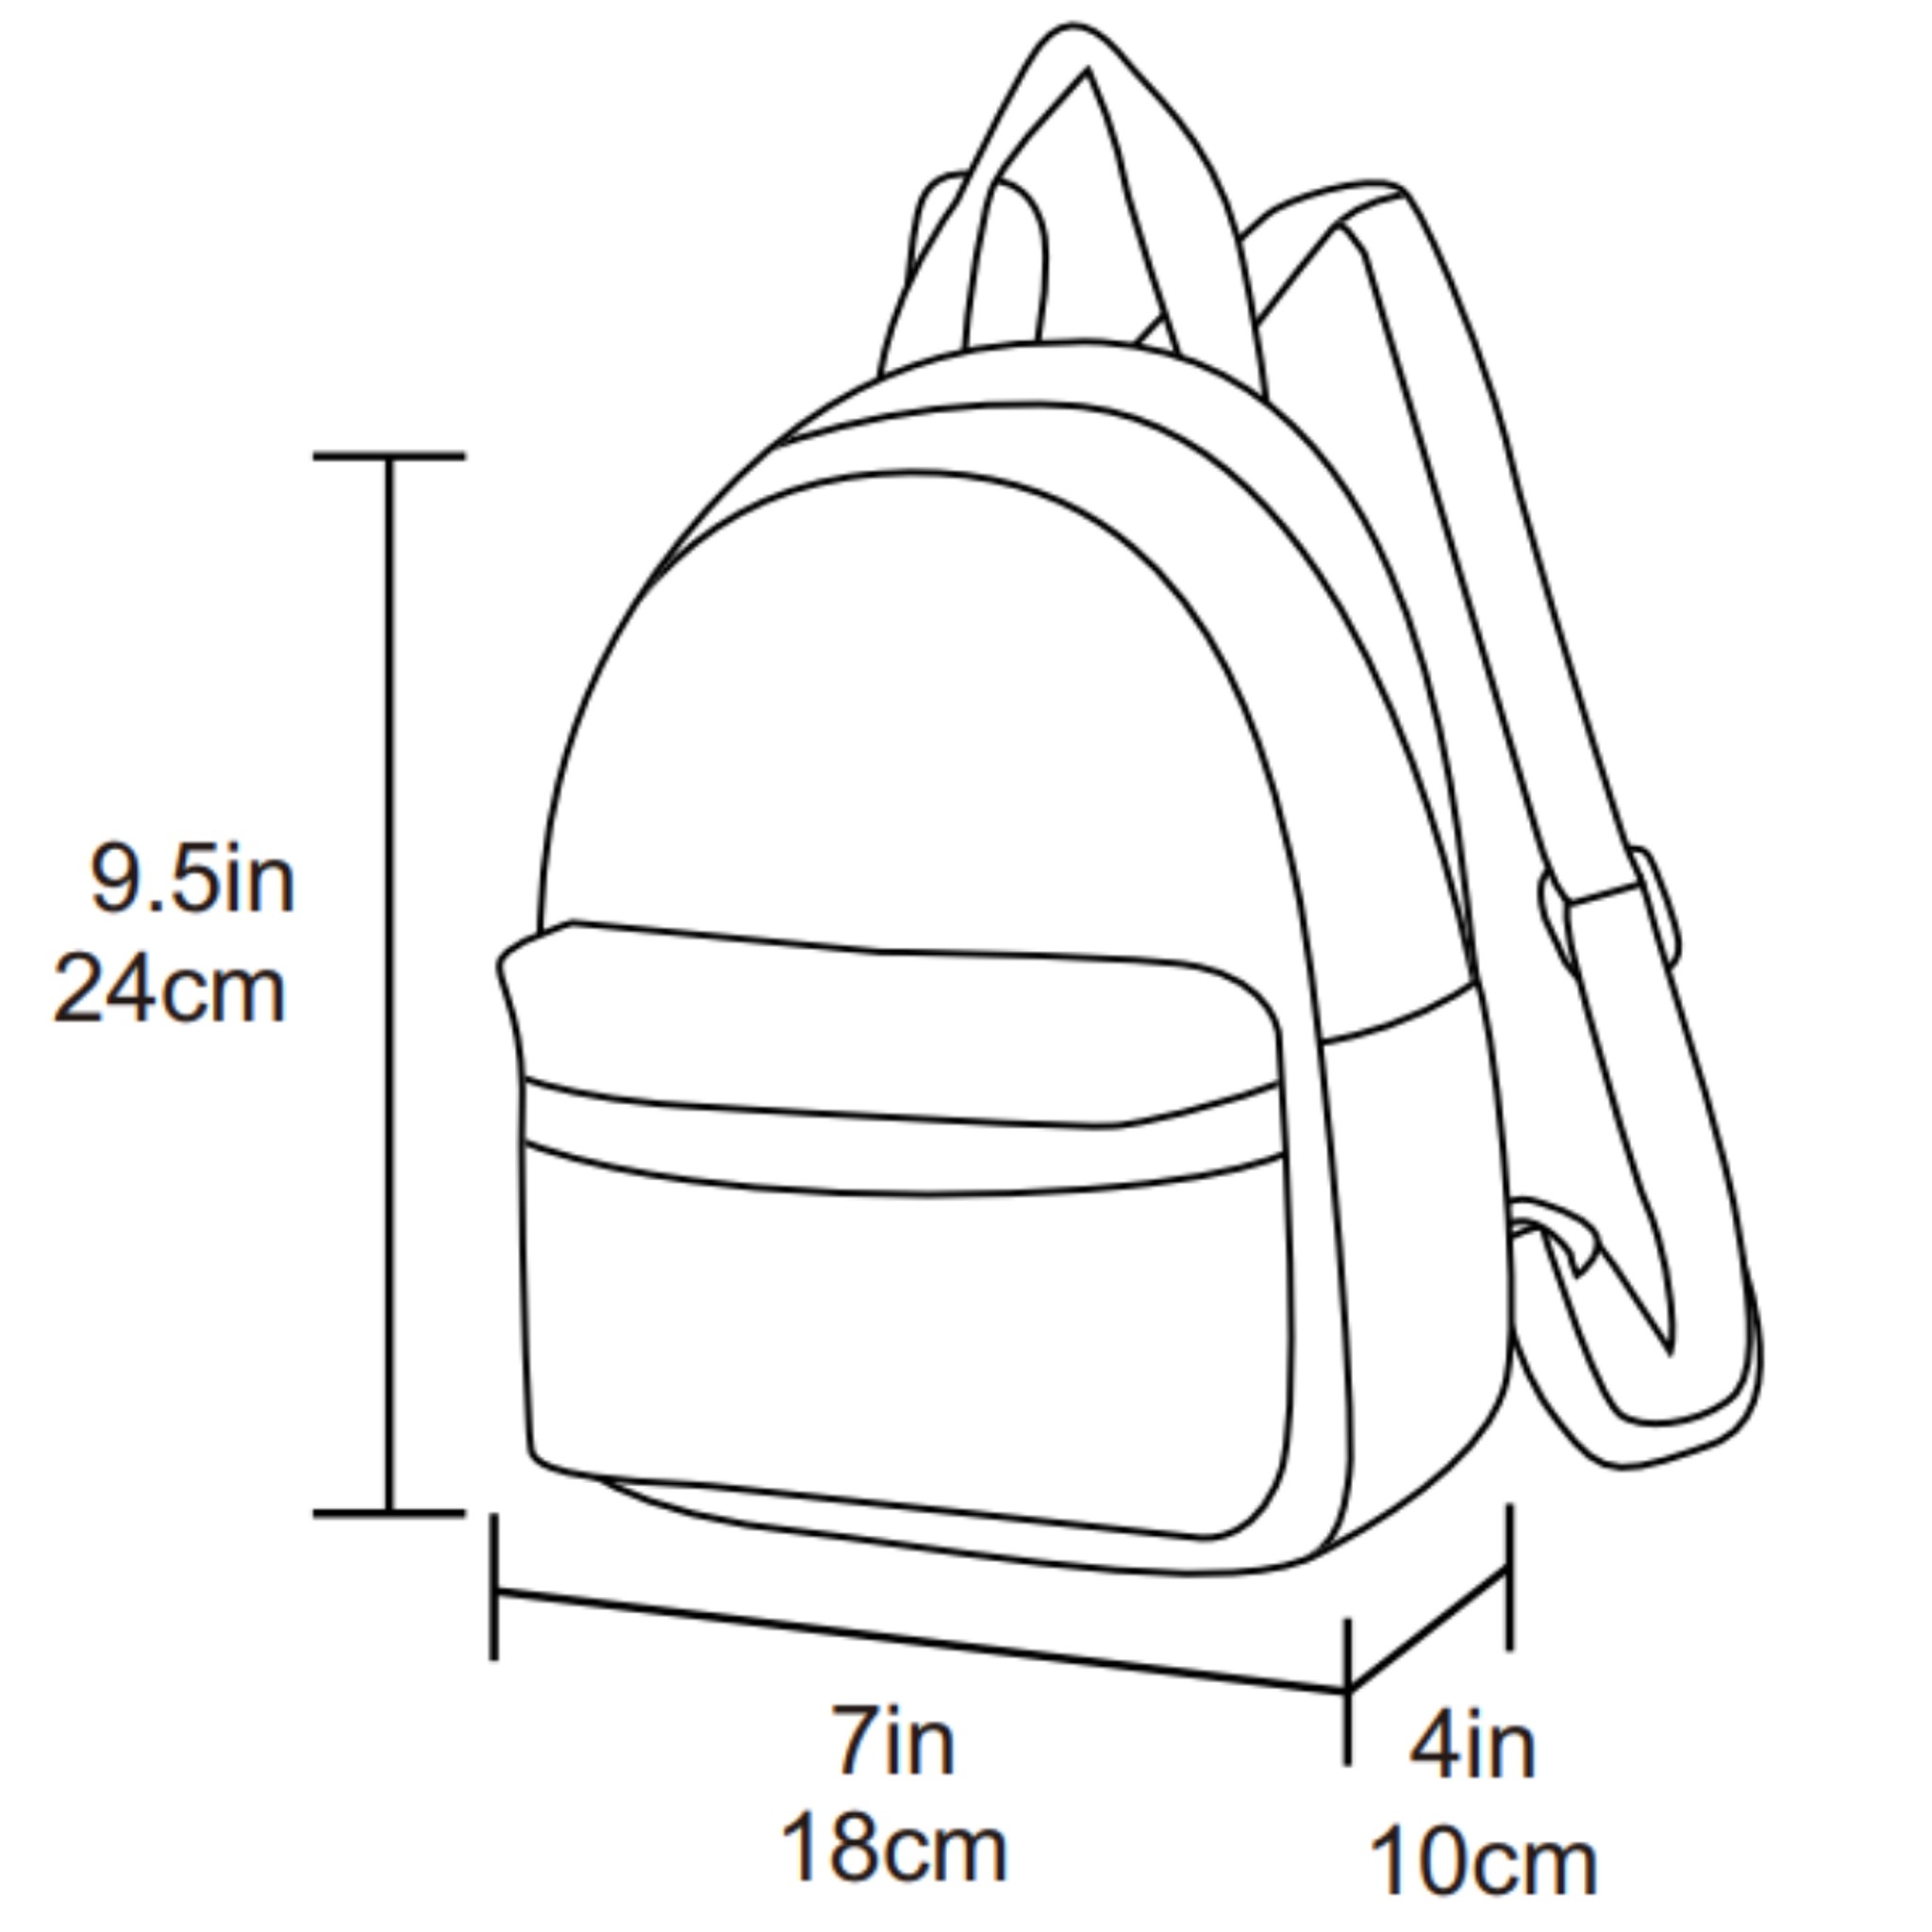 YLX Mini Backpack Dimensions